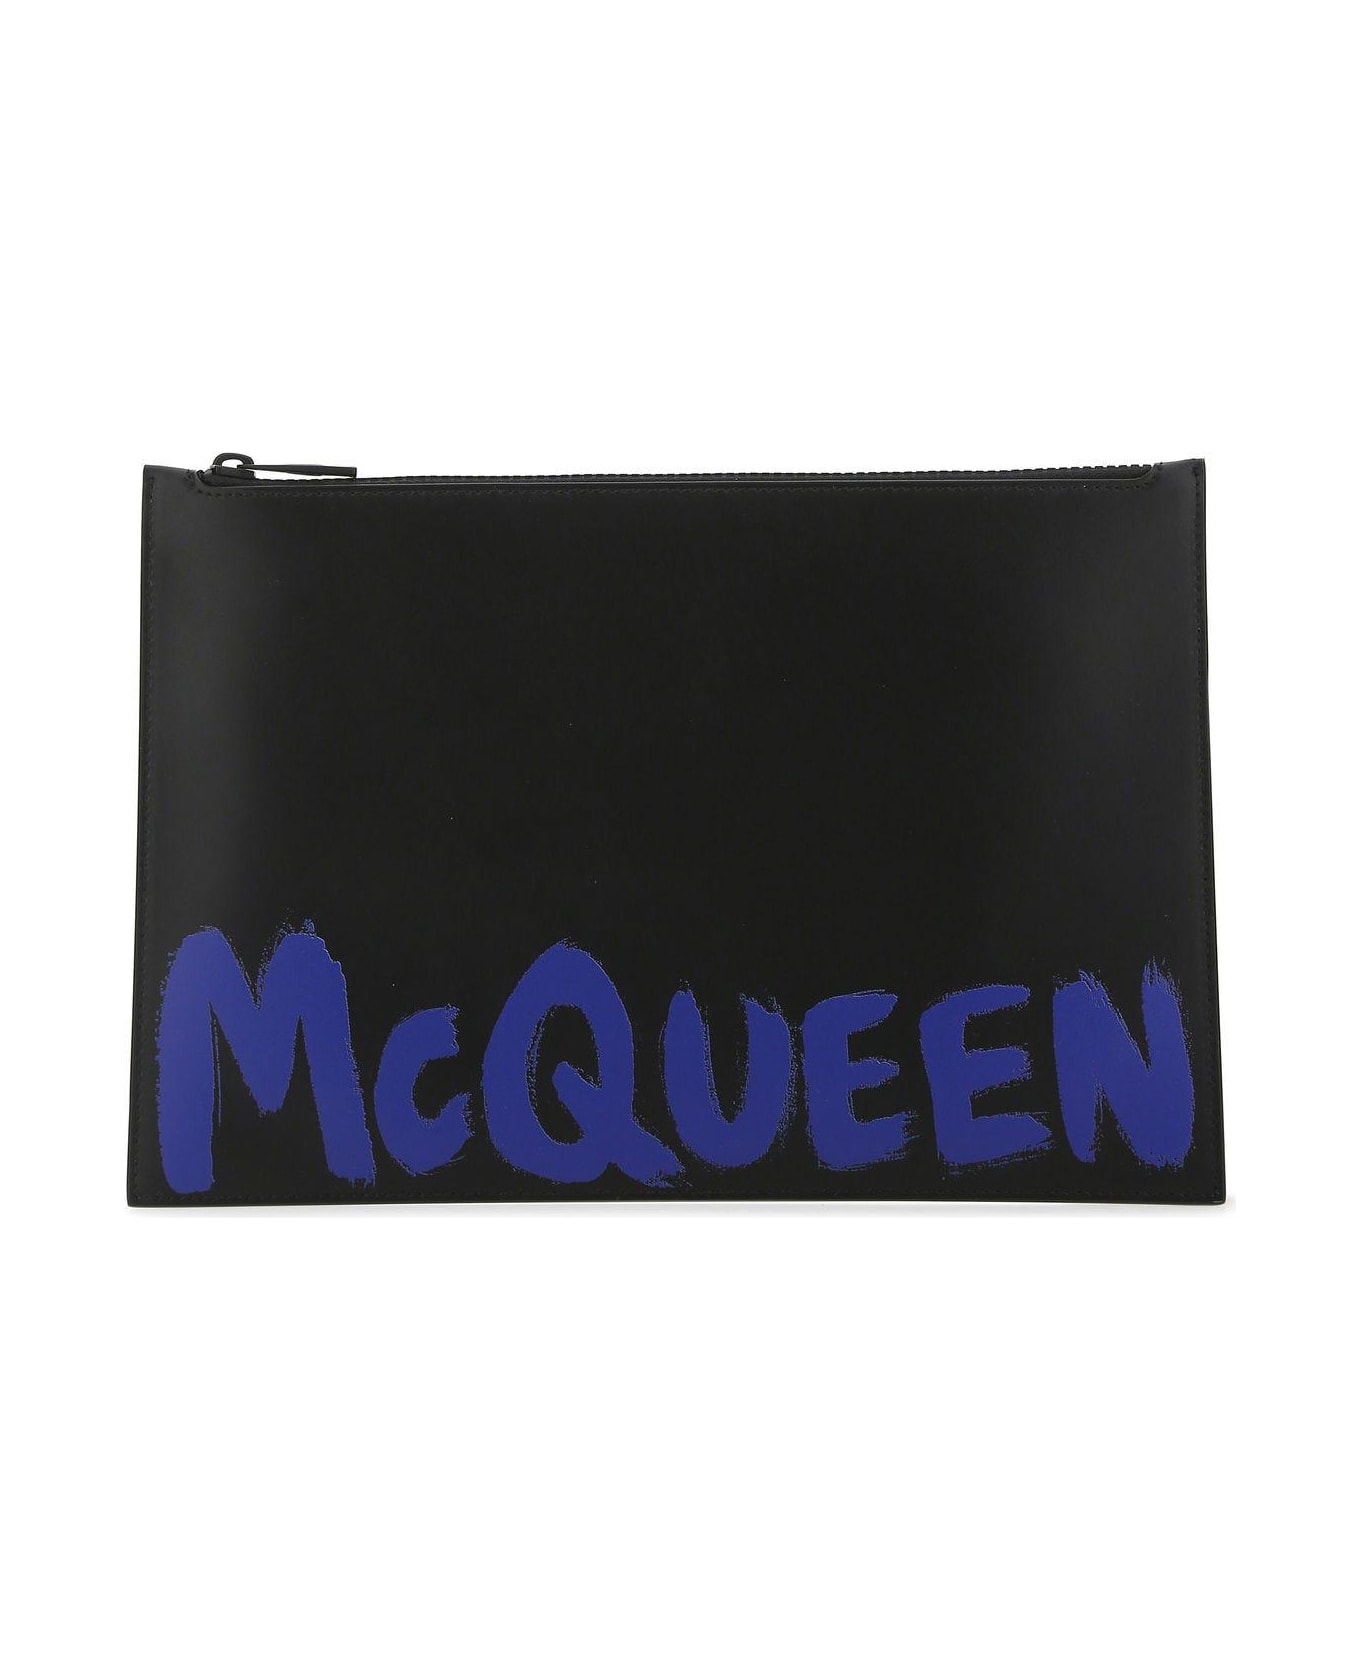 Alexander McQueen Black Leather Clutch - Black